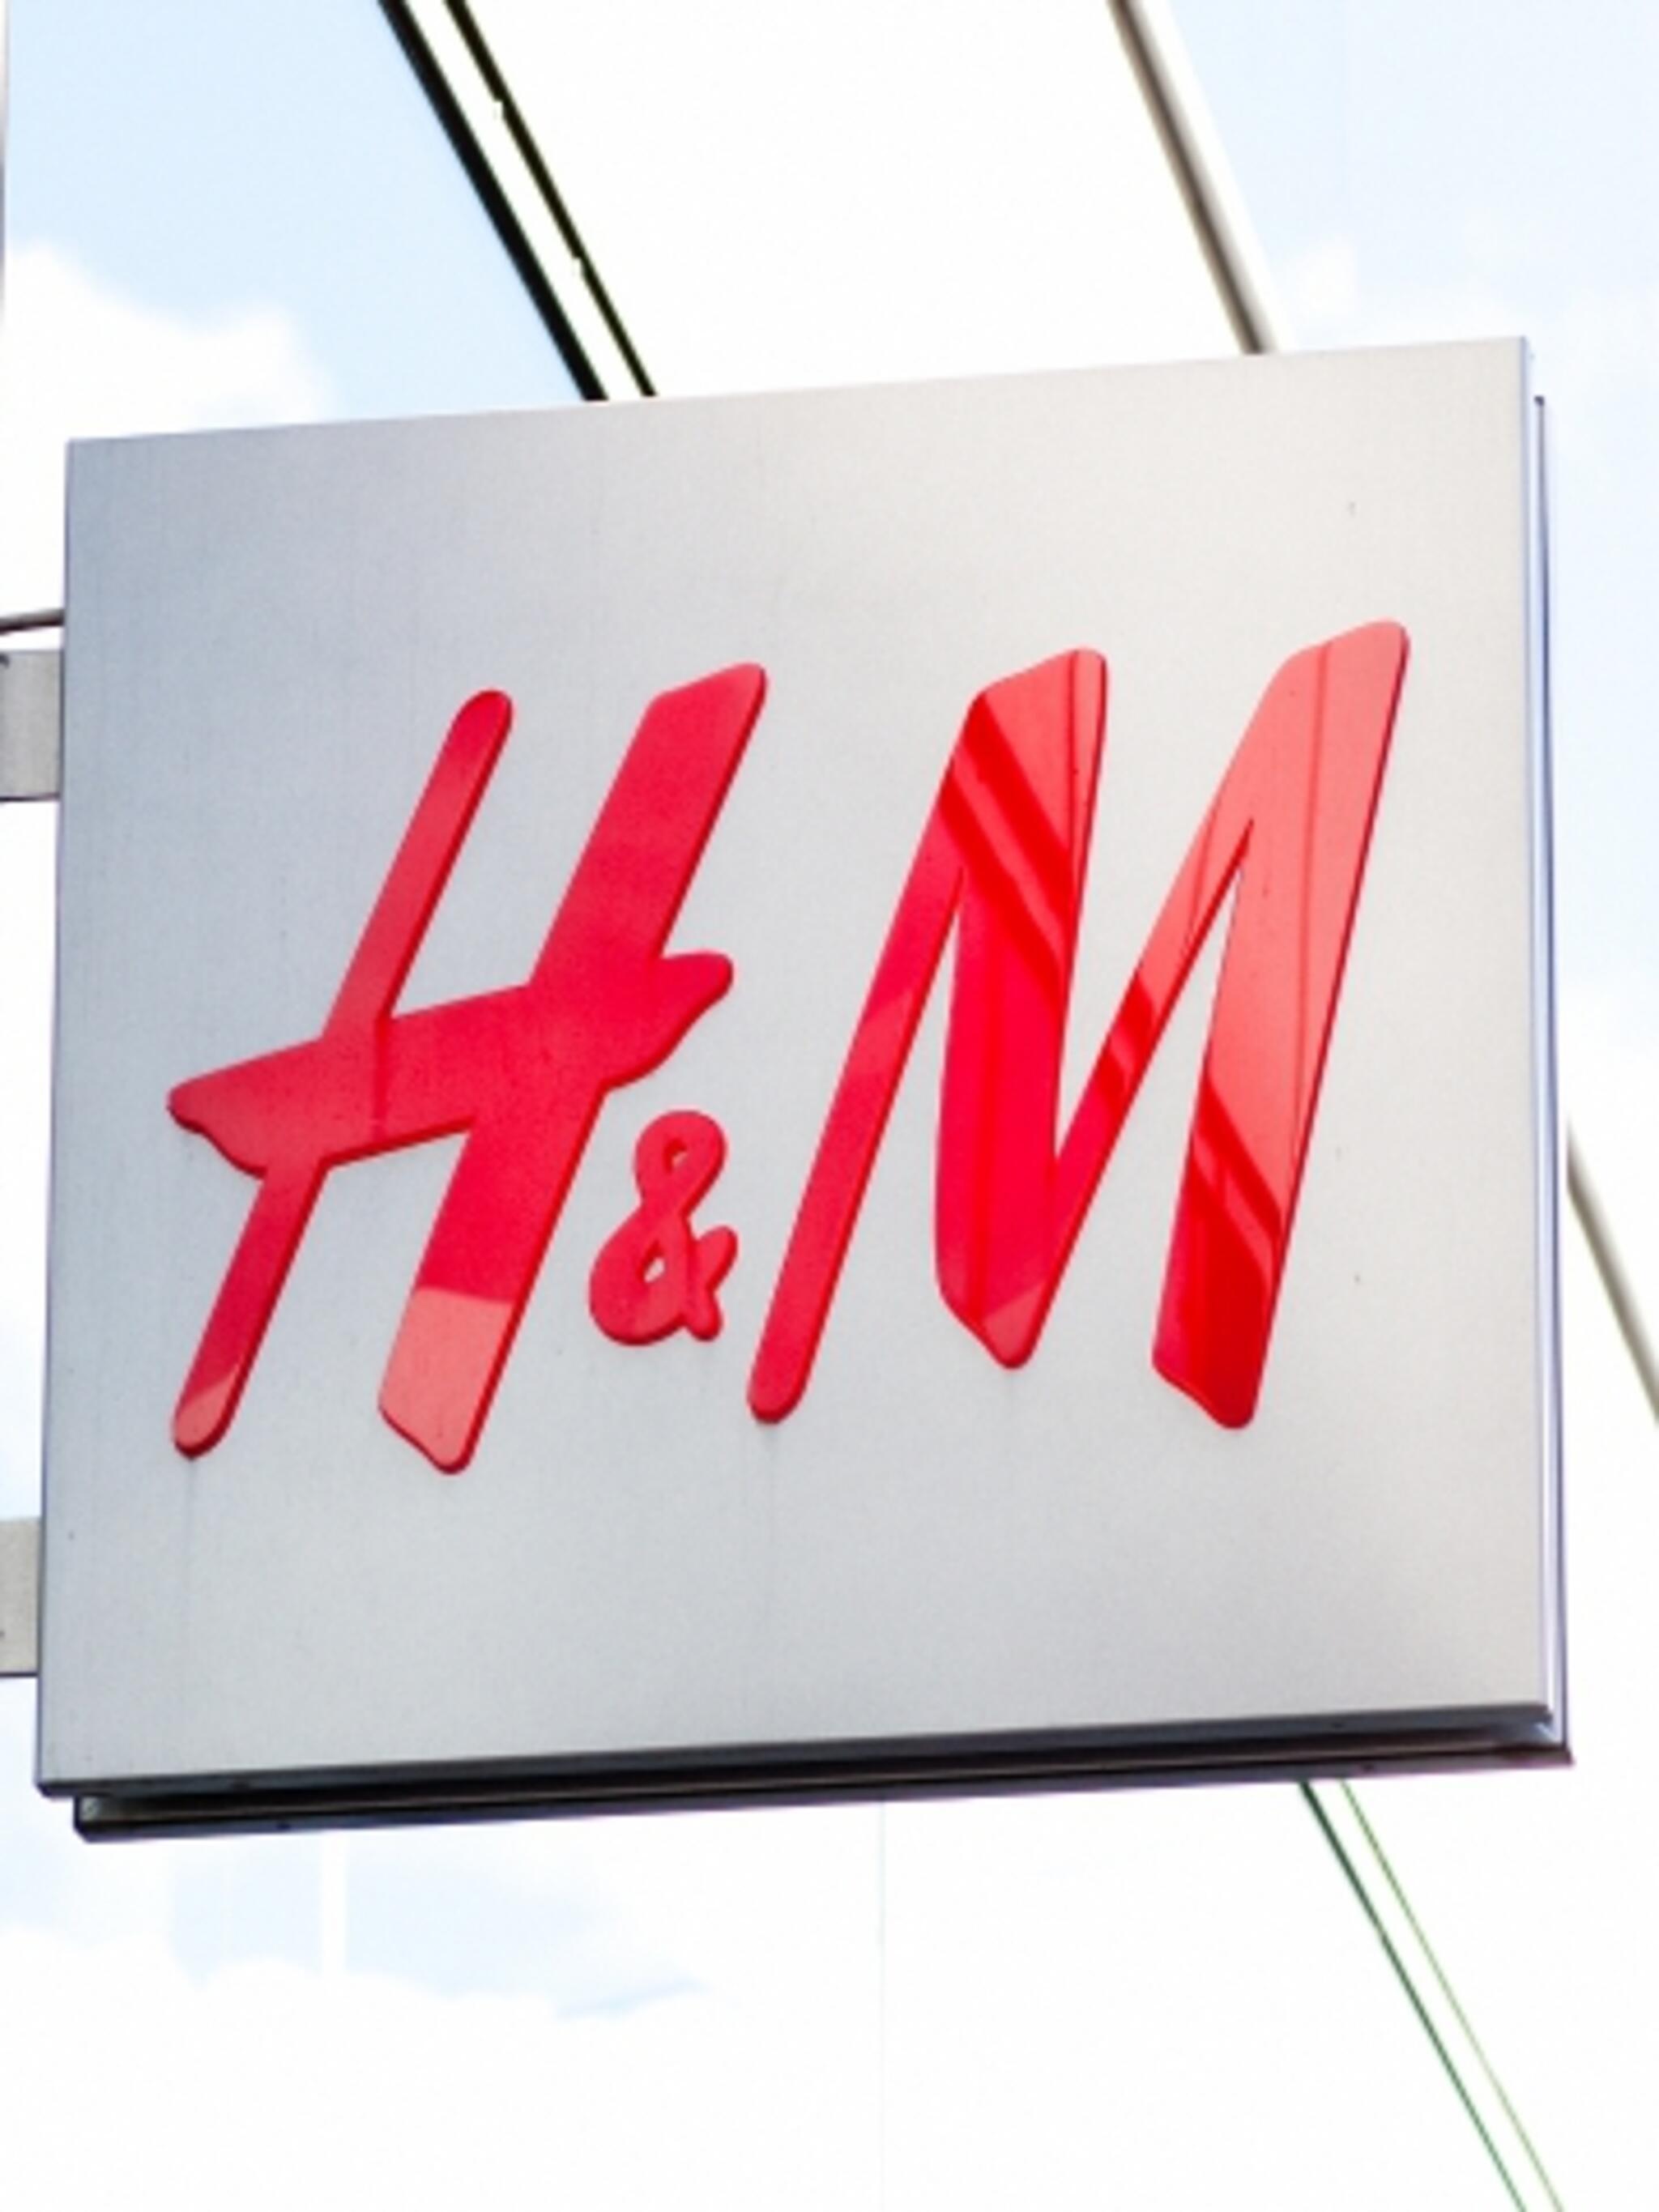 H&M ランドマークプラザ横浜店の代表写真10